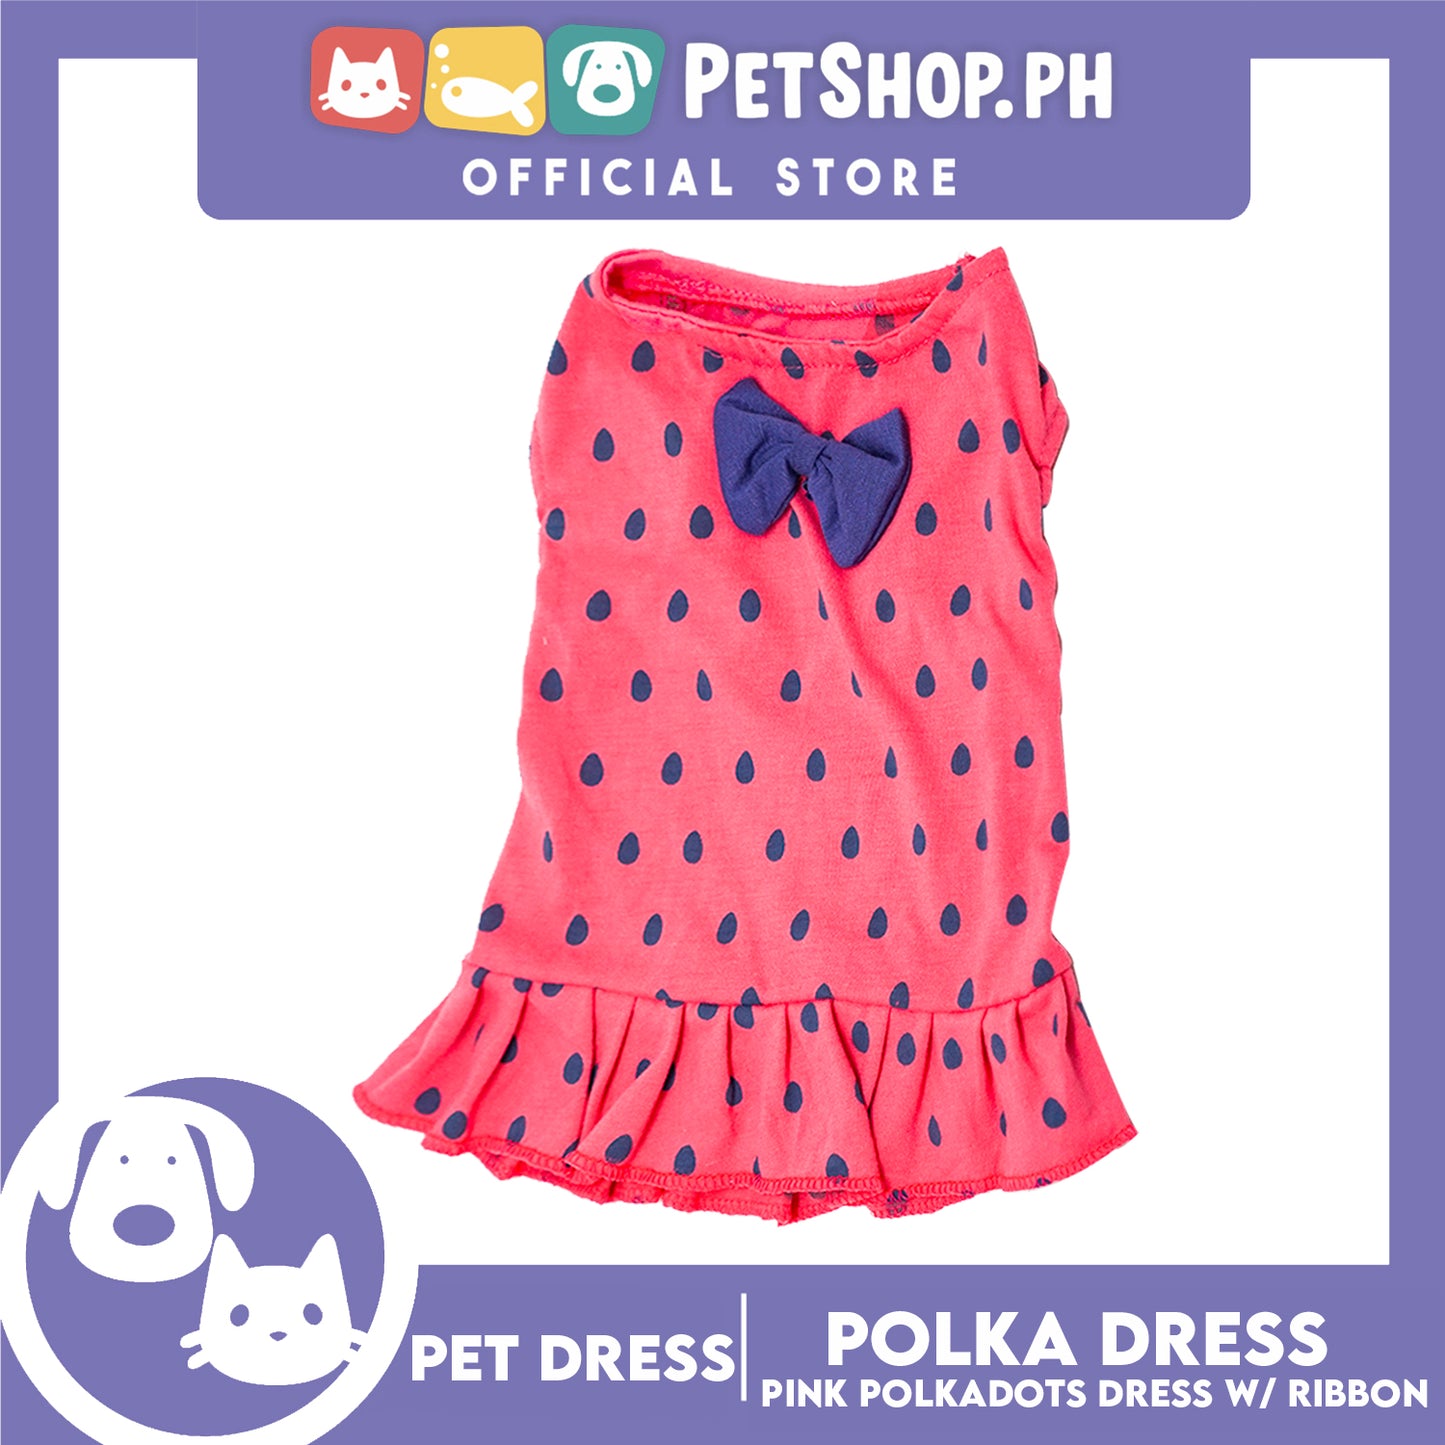 Pet Cloth Pink Polka Dress with Violet Ribbon Design